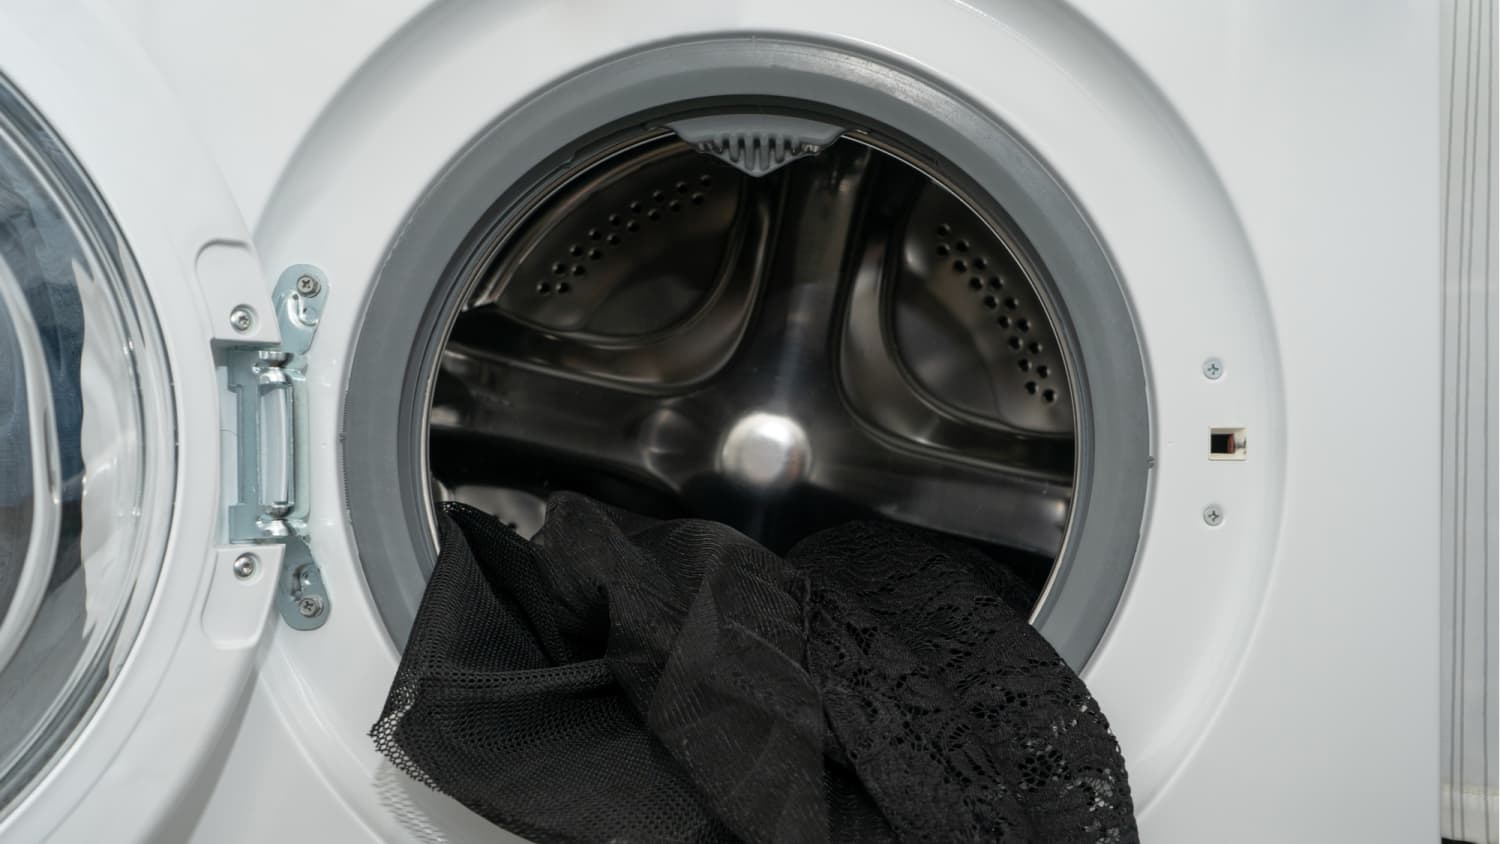 https://cdn.apartmenttherapy.info/image/upload/f_jpg,q_auto:eco,c_fill,g_auto,w_1500,ar_16:9/dry-clean-machine-wash